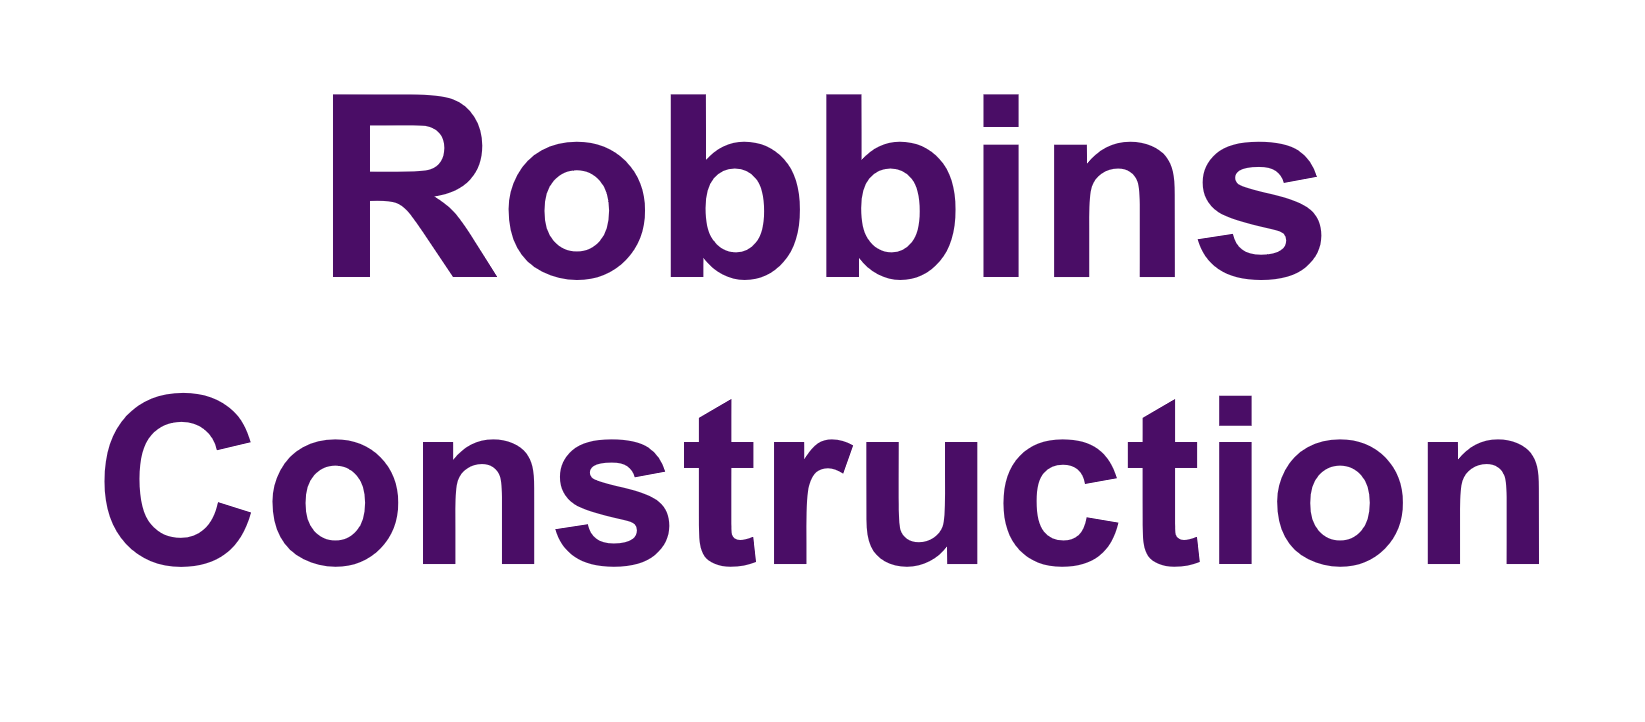 5h. Robbins Construction (Partner)